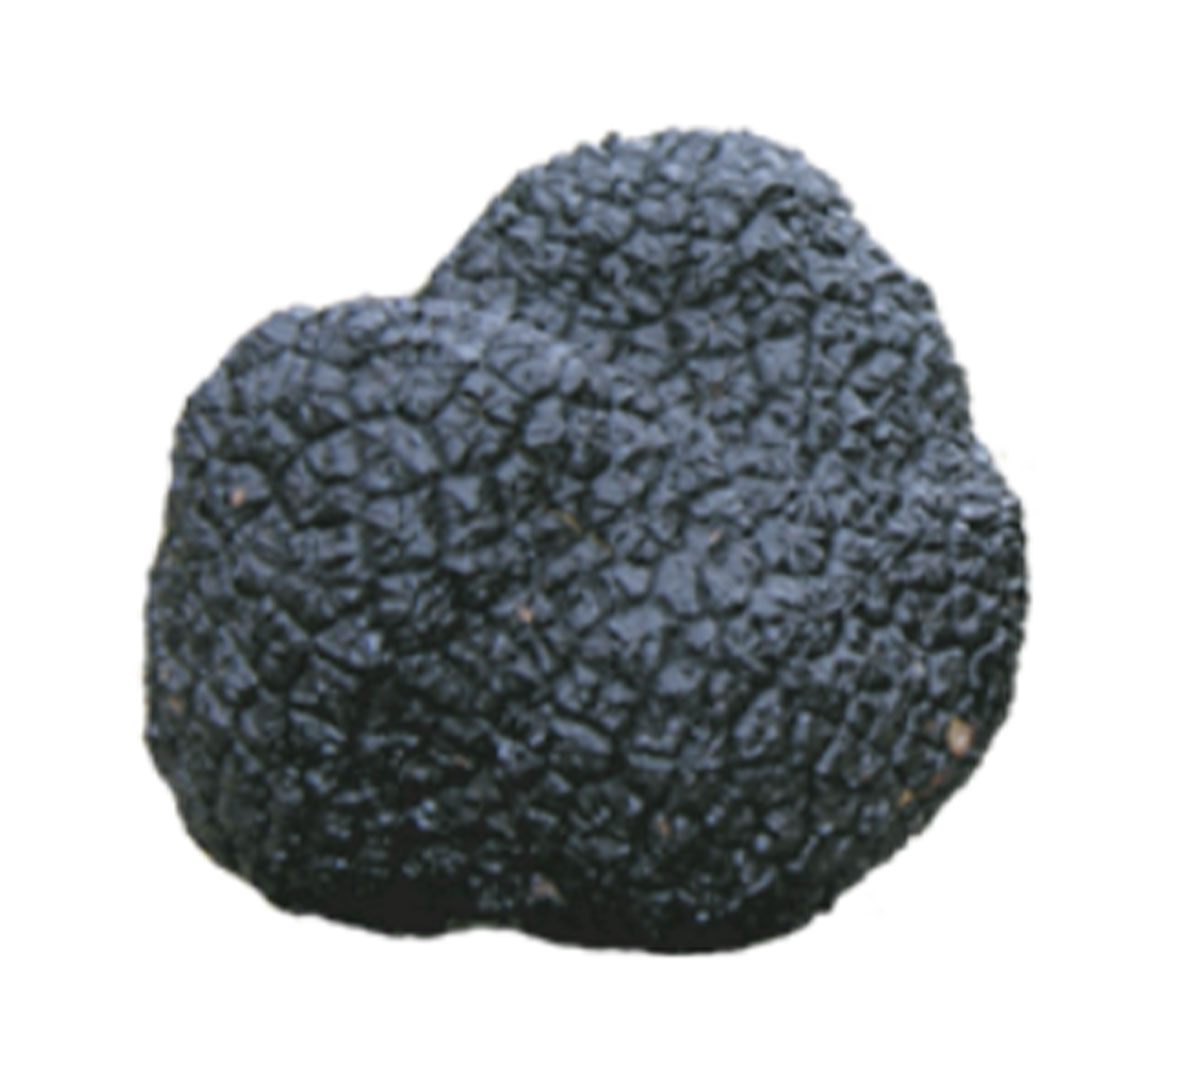 Fresh black summer truffle